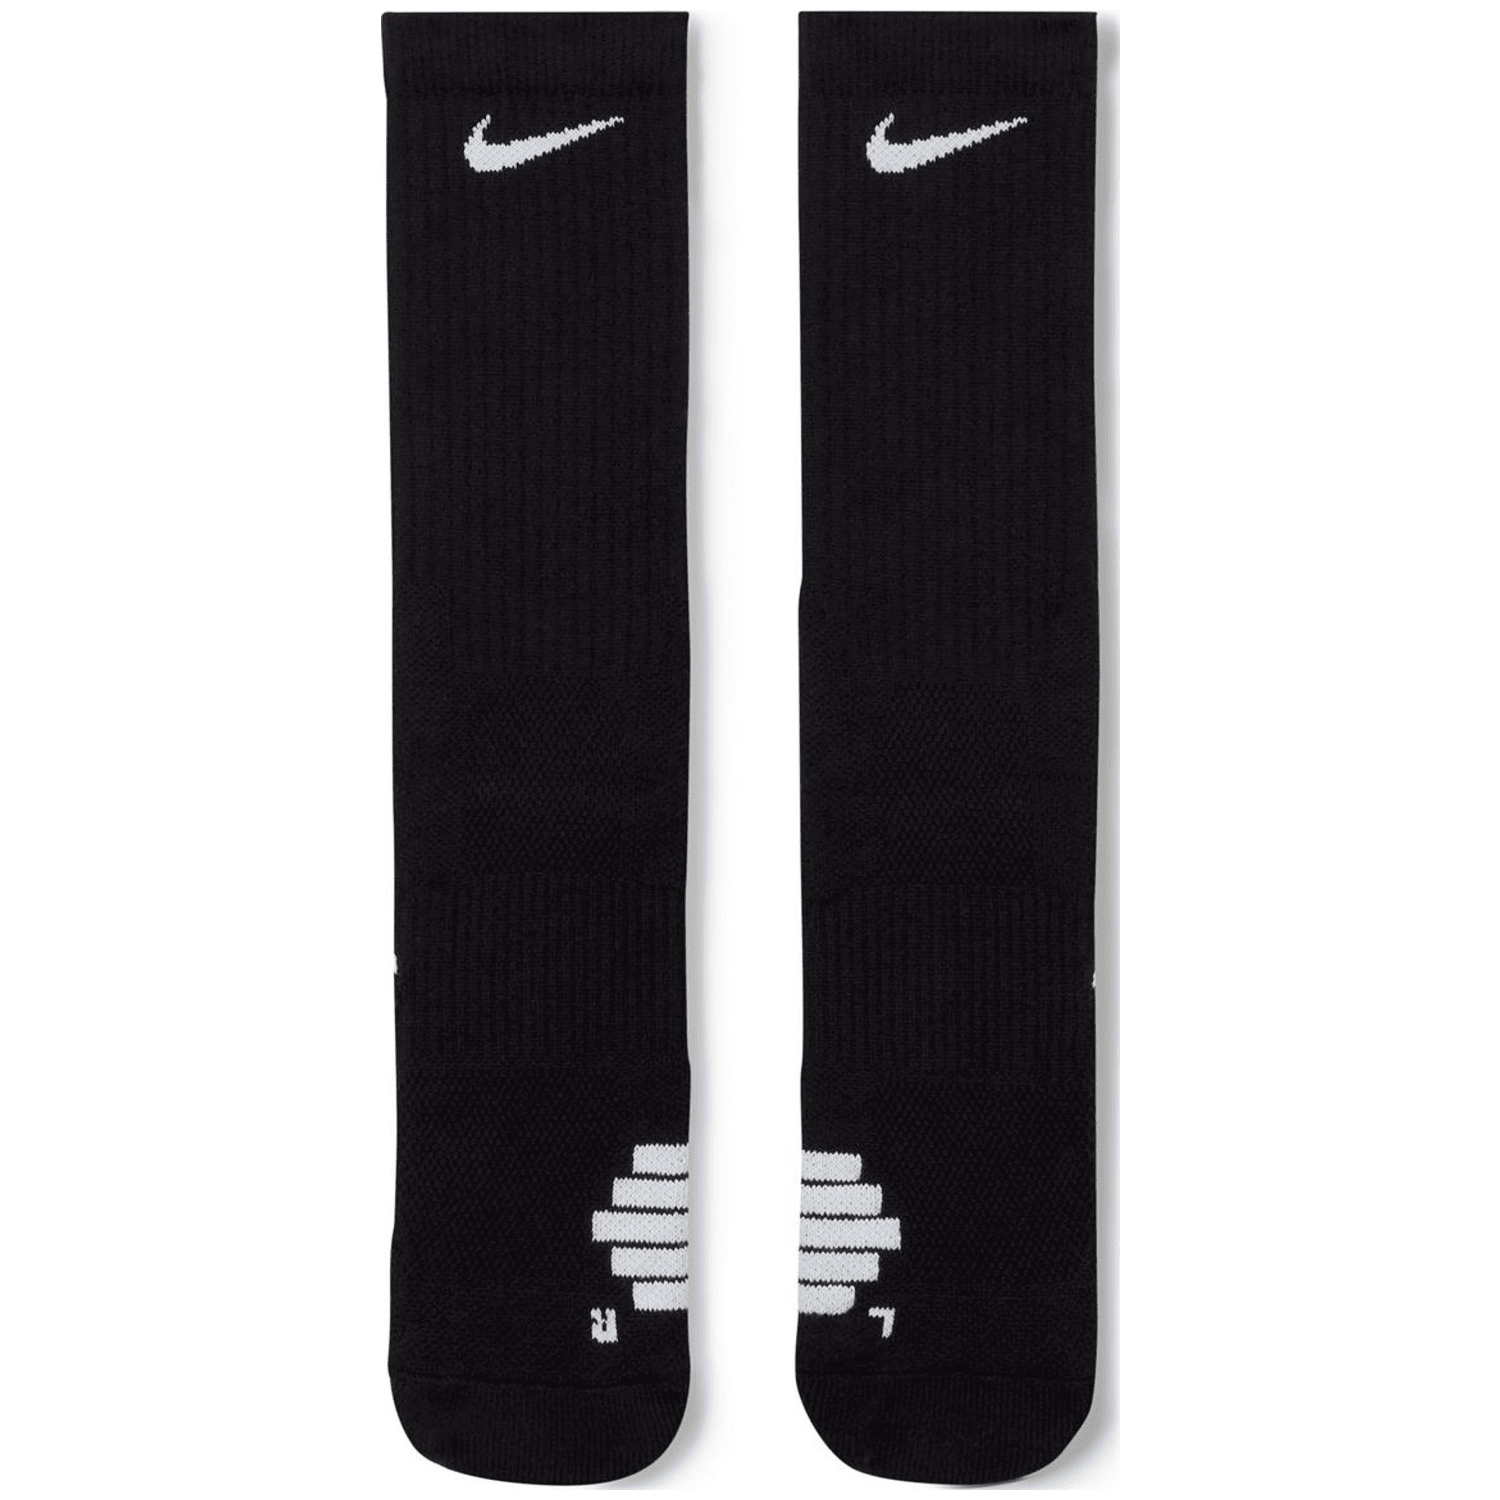 Nike Elite Crew Unisex Socken